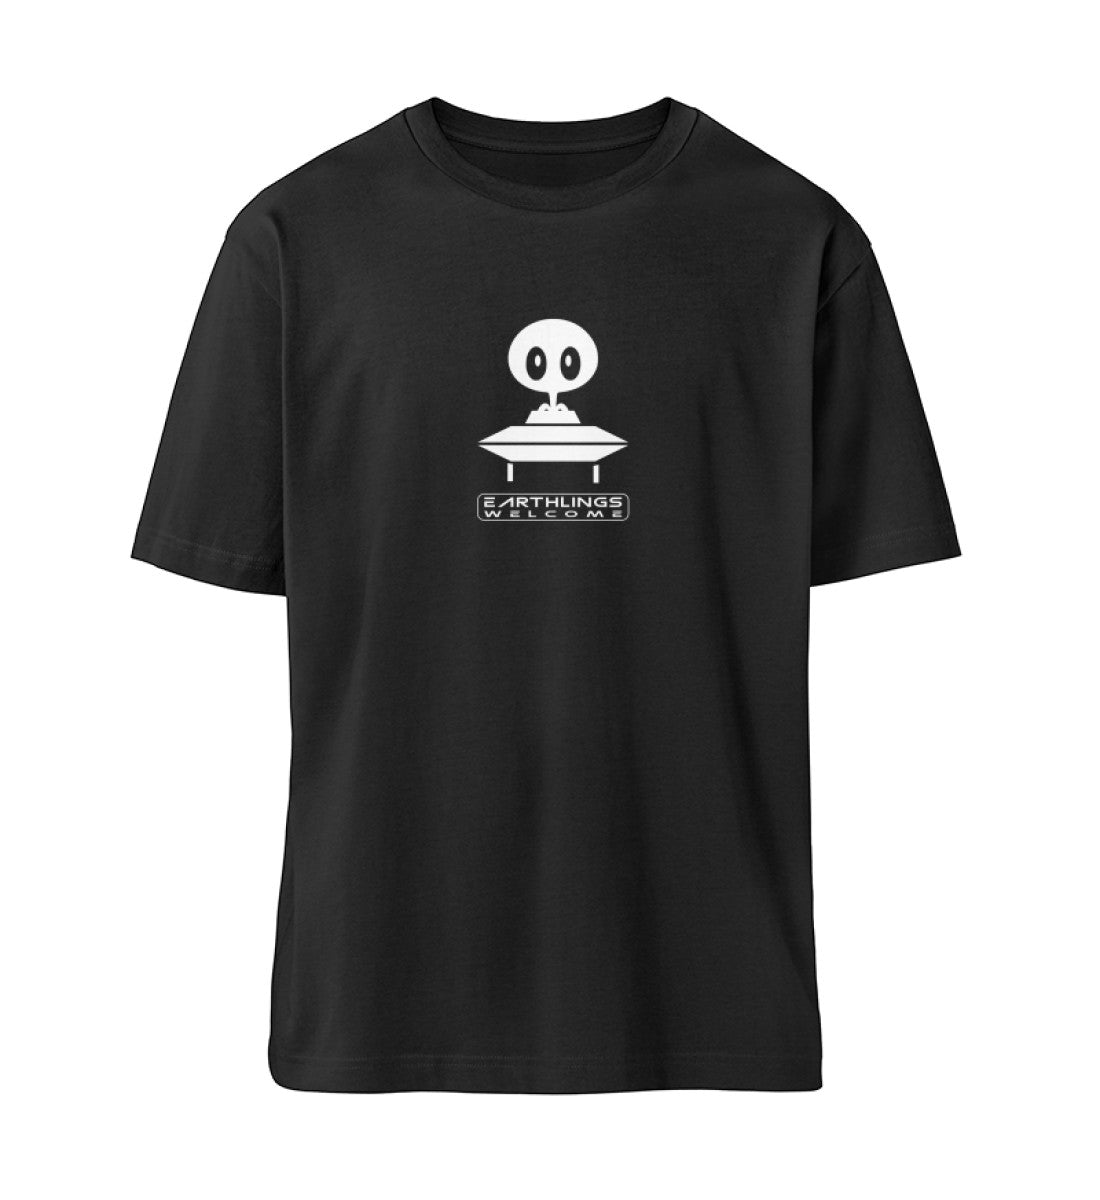 Schwarzes T-Shirt Unisex Relaxed Fit für Frauen und Männer bedruckt mit dem Design der Roger Rockawoo Kollektion Alien ufo earthlings welccome